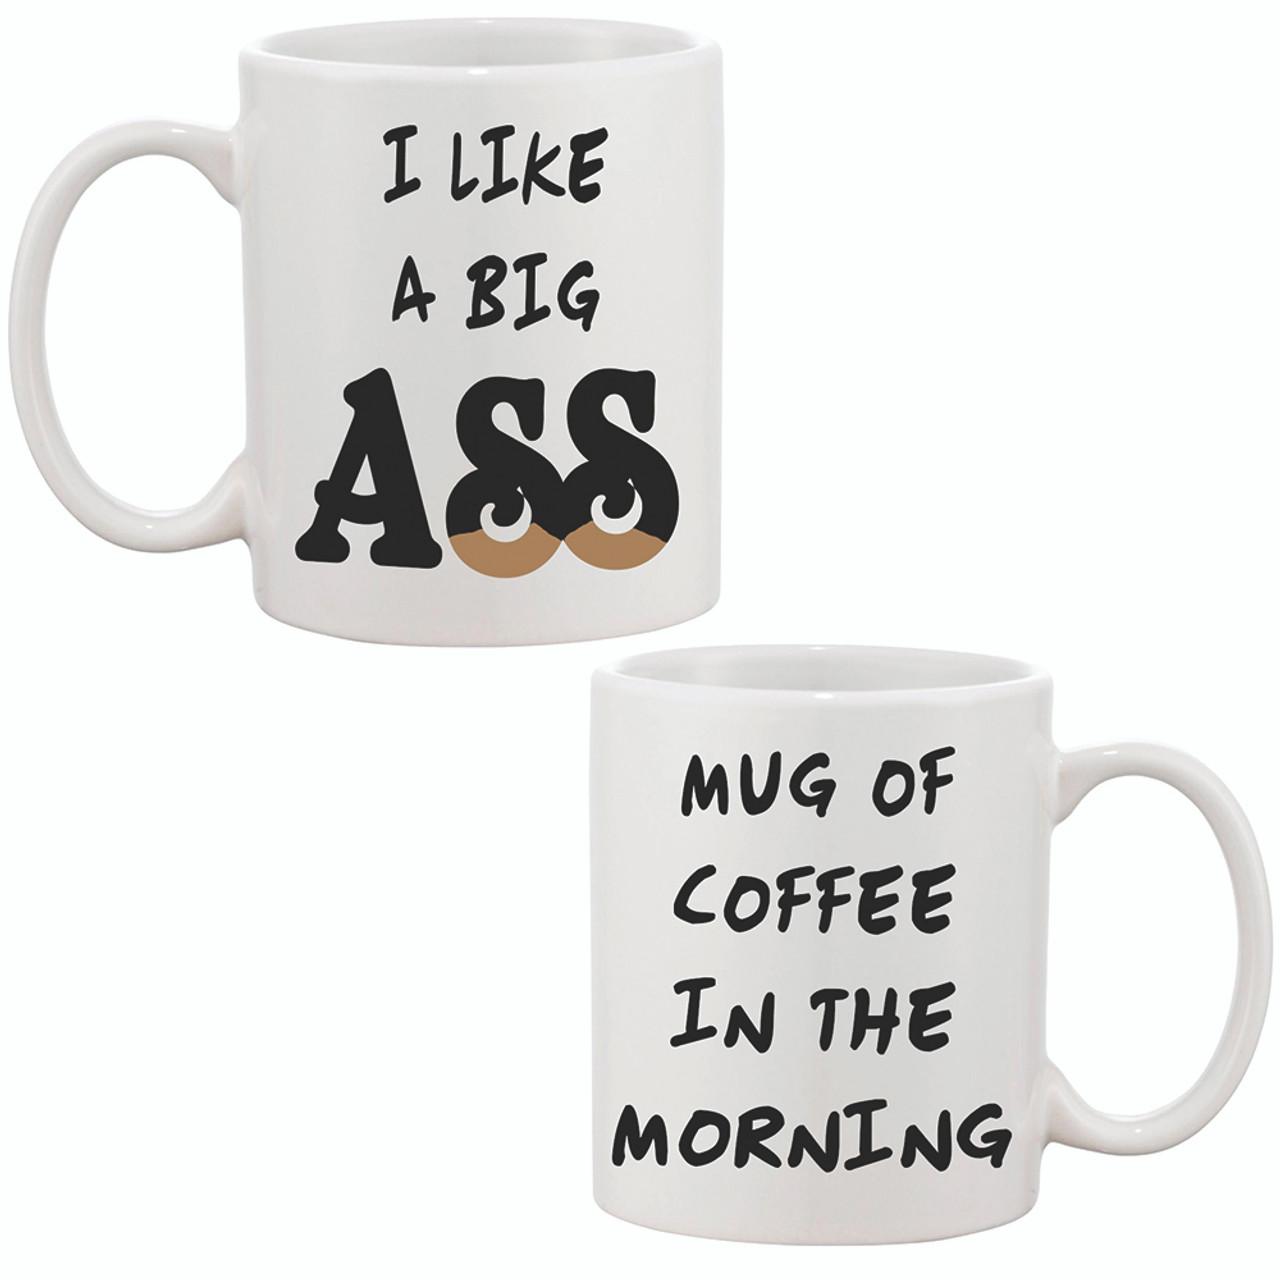 Fancy Ass Coffee Mug